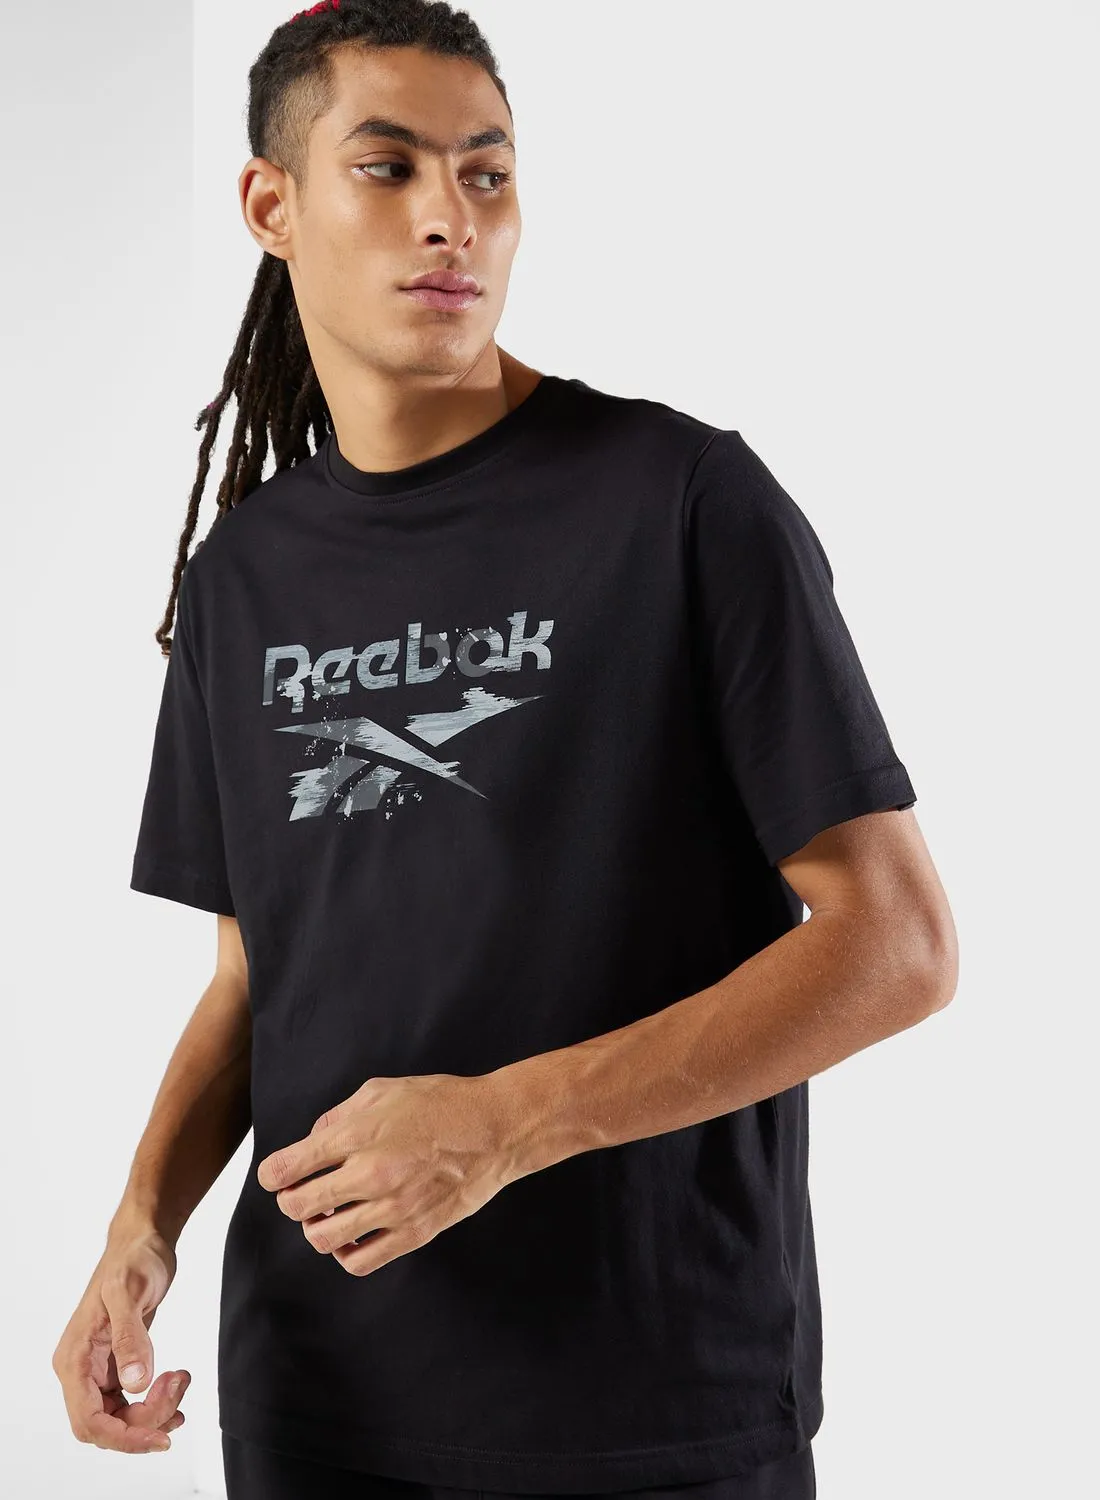 Reebok Basketball Pump Graphic T-Shirt